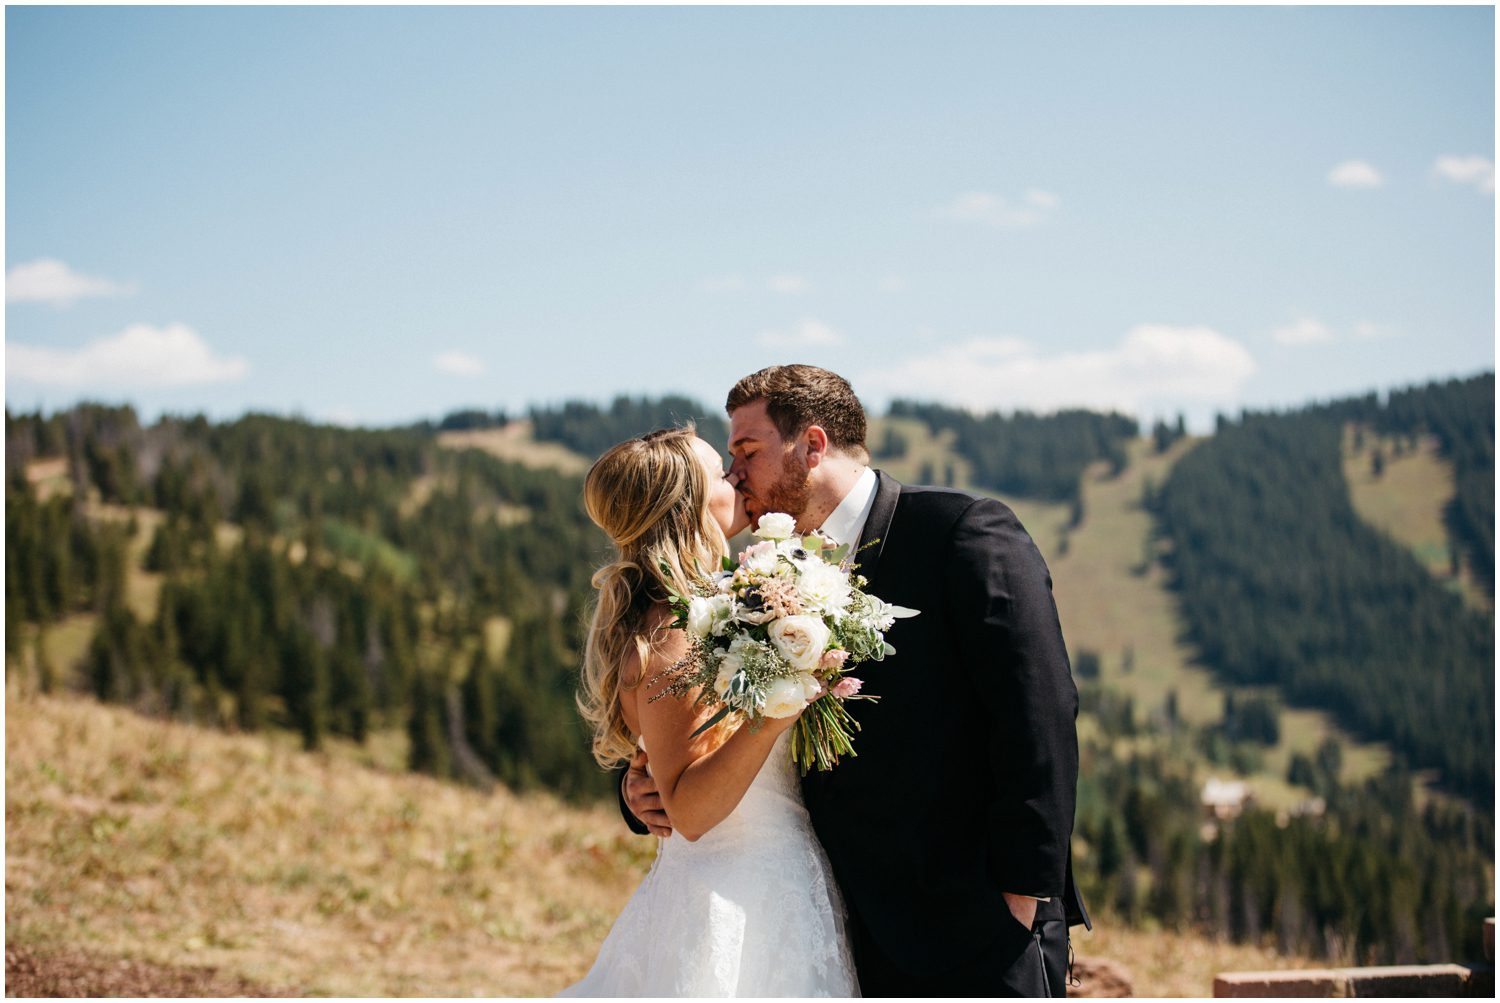 First look on Vail Mountain Colorado, Vail Colorado Wedding Photos, Donovan Pavilion Vail Colorado